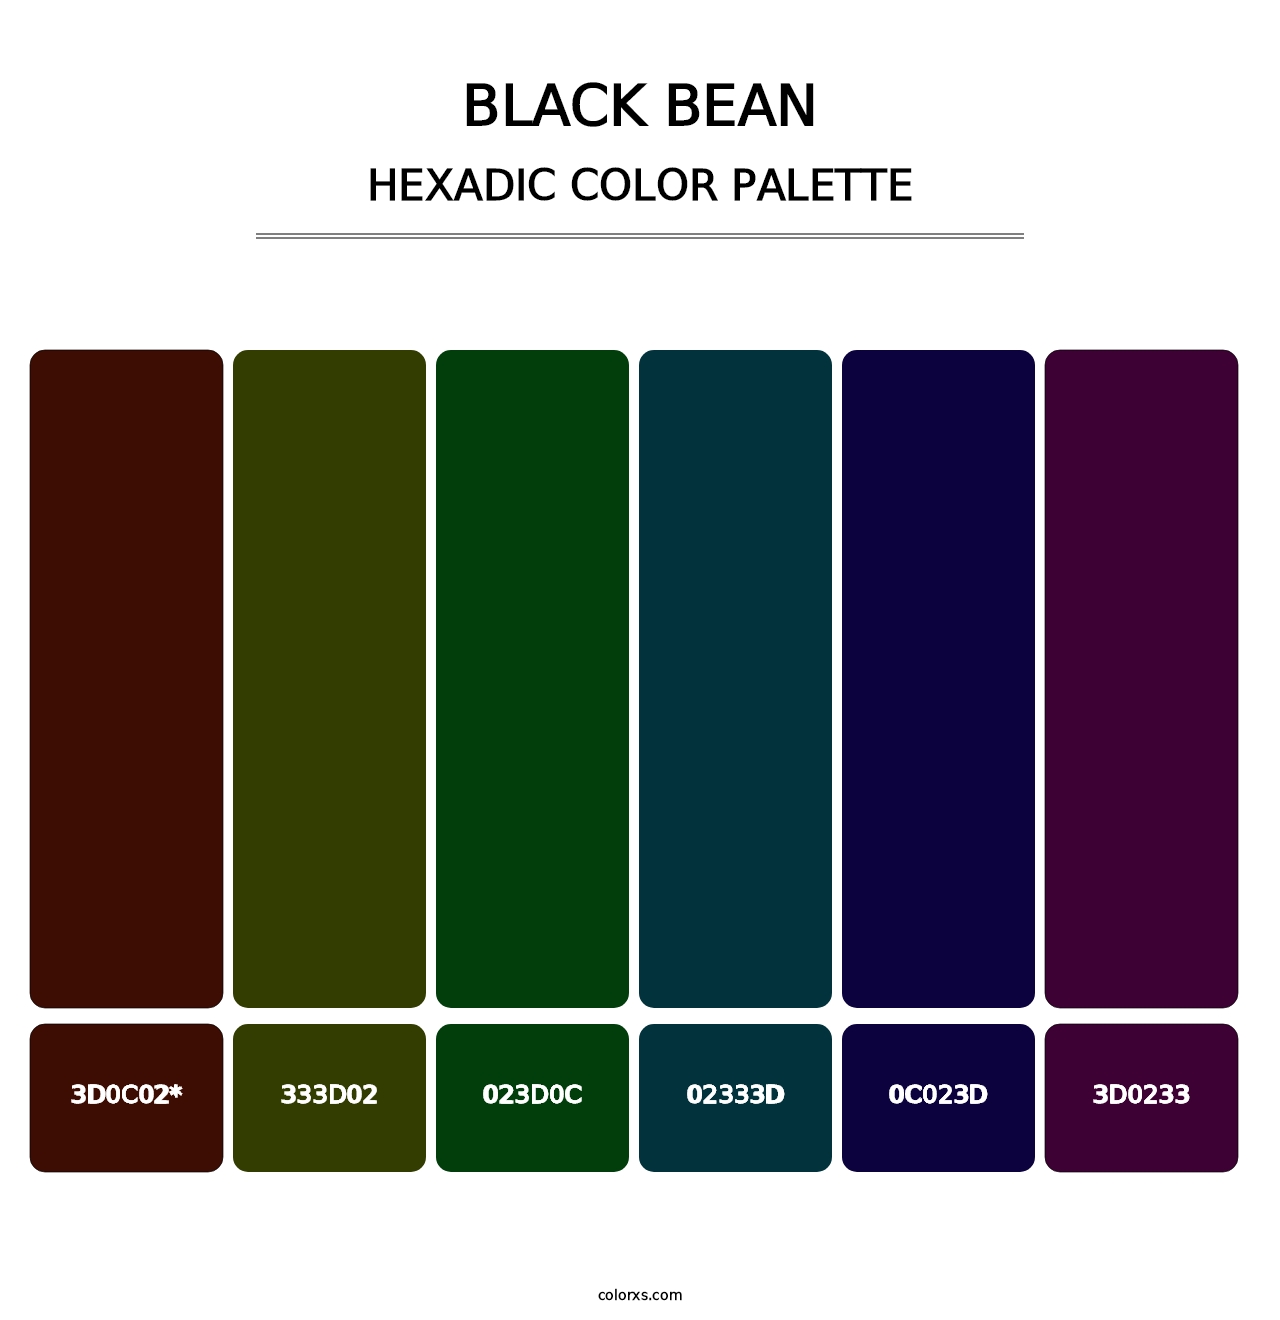 Black Bean - Hexadic Color Palette